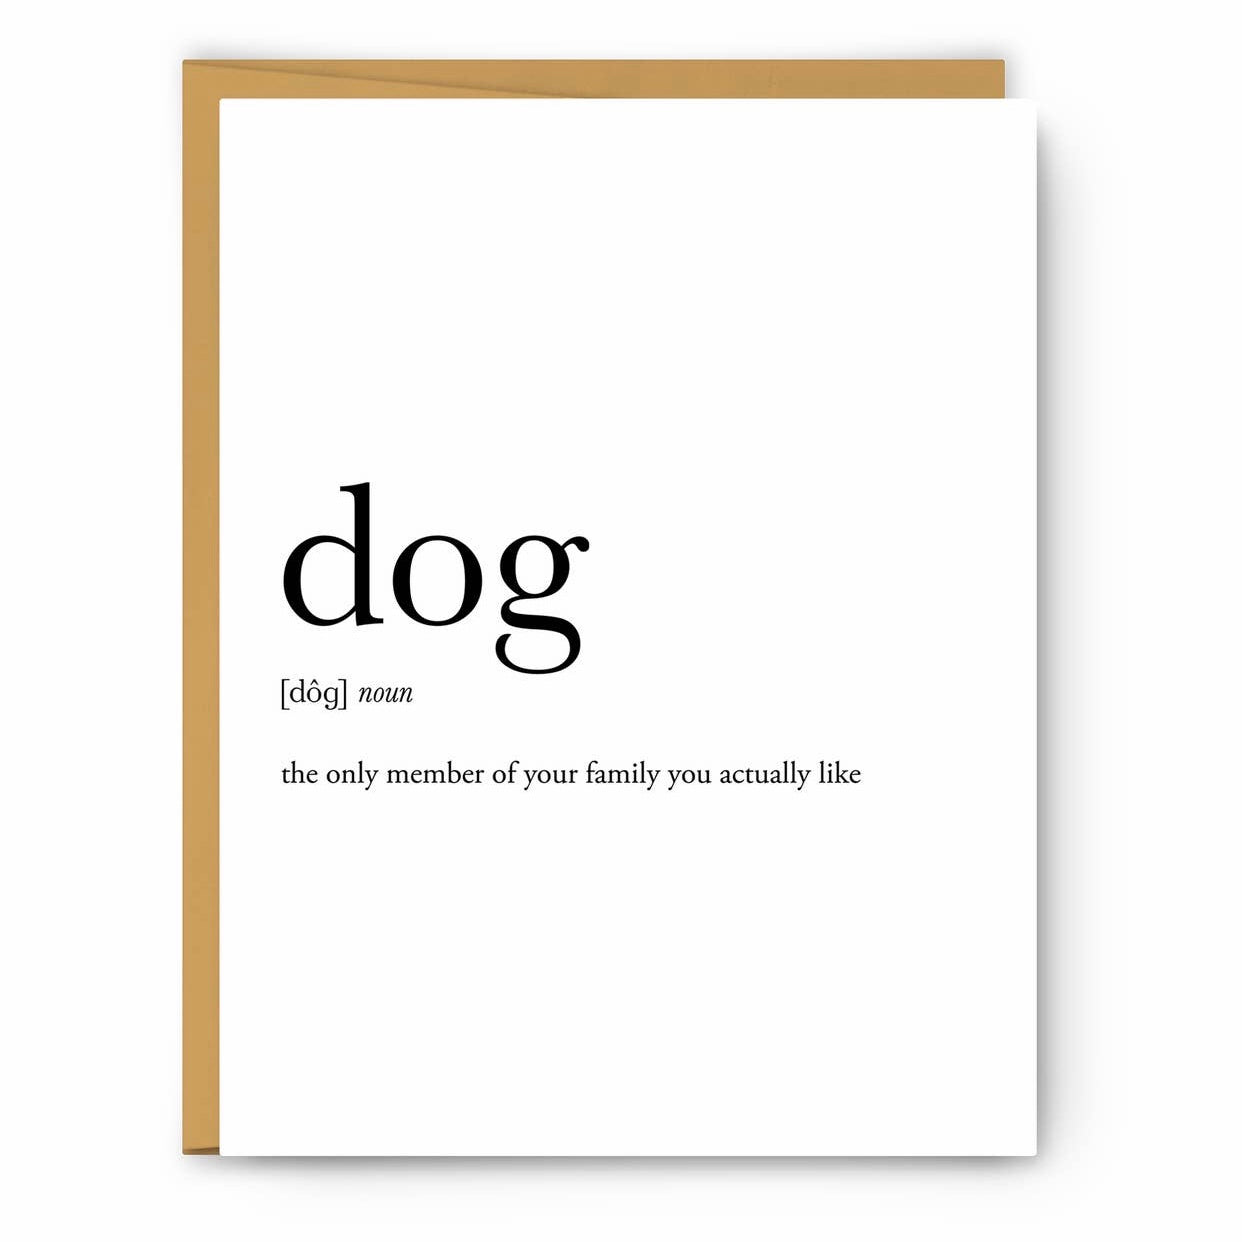 dog noun greeting card